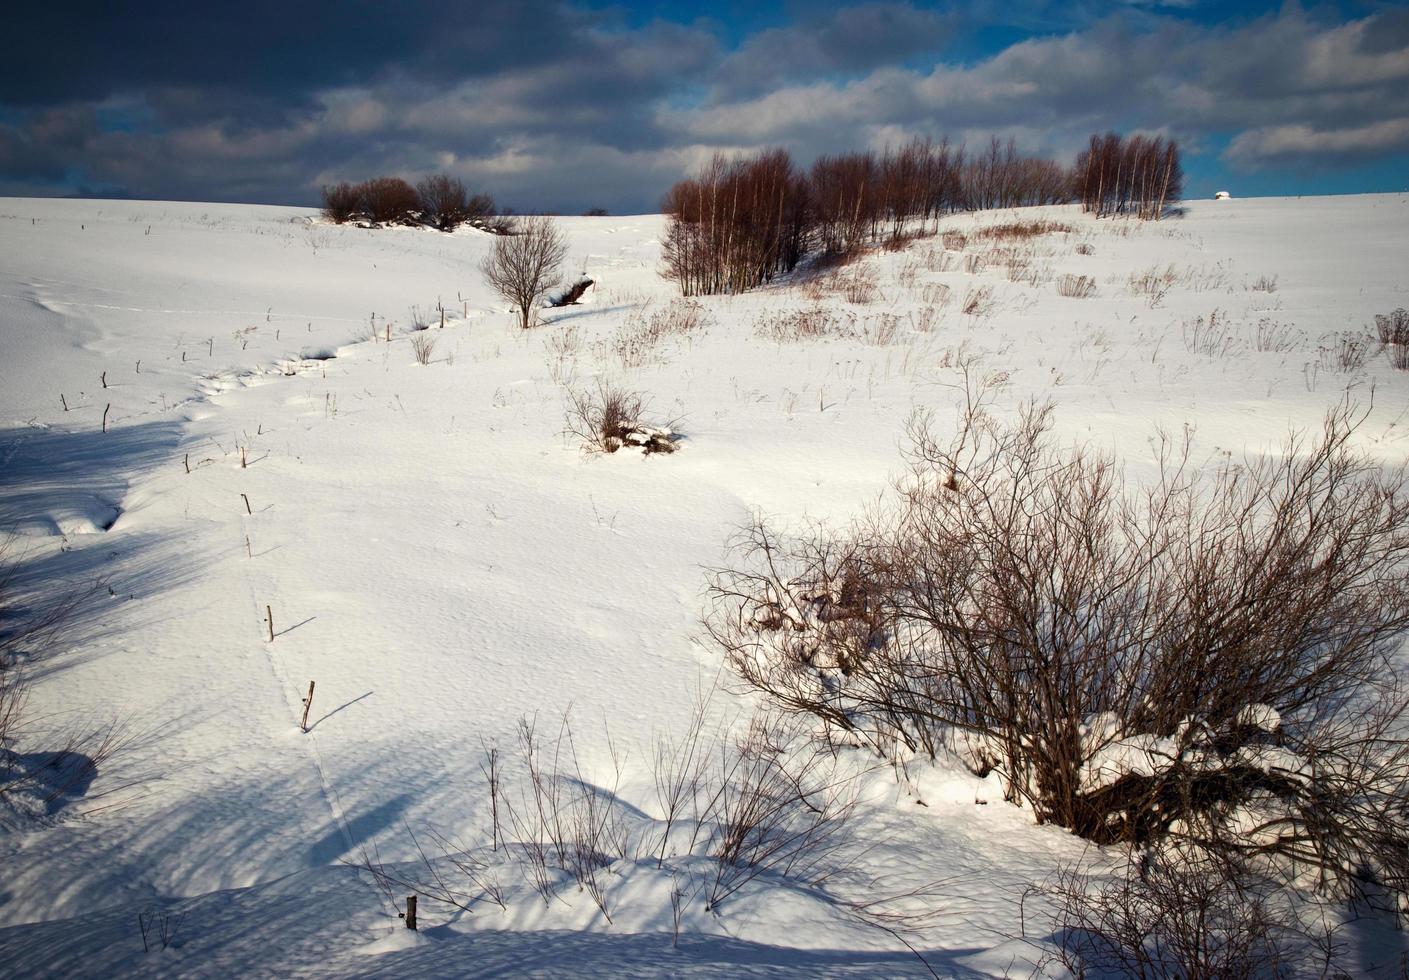 Winter snowy landscape photo